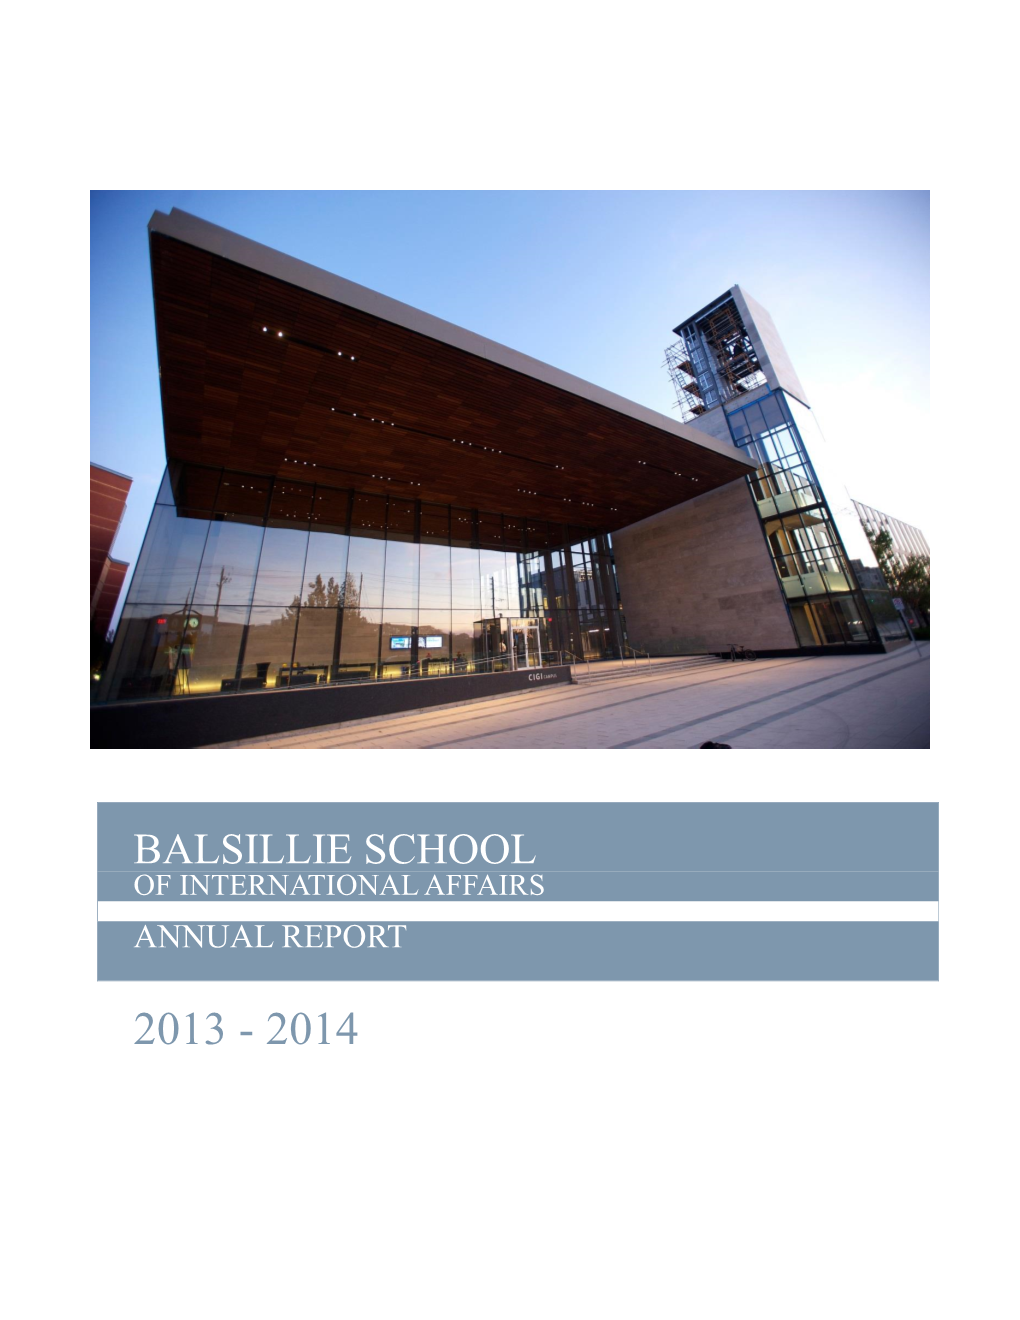 Balsillie School of International Affairs Annual Report